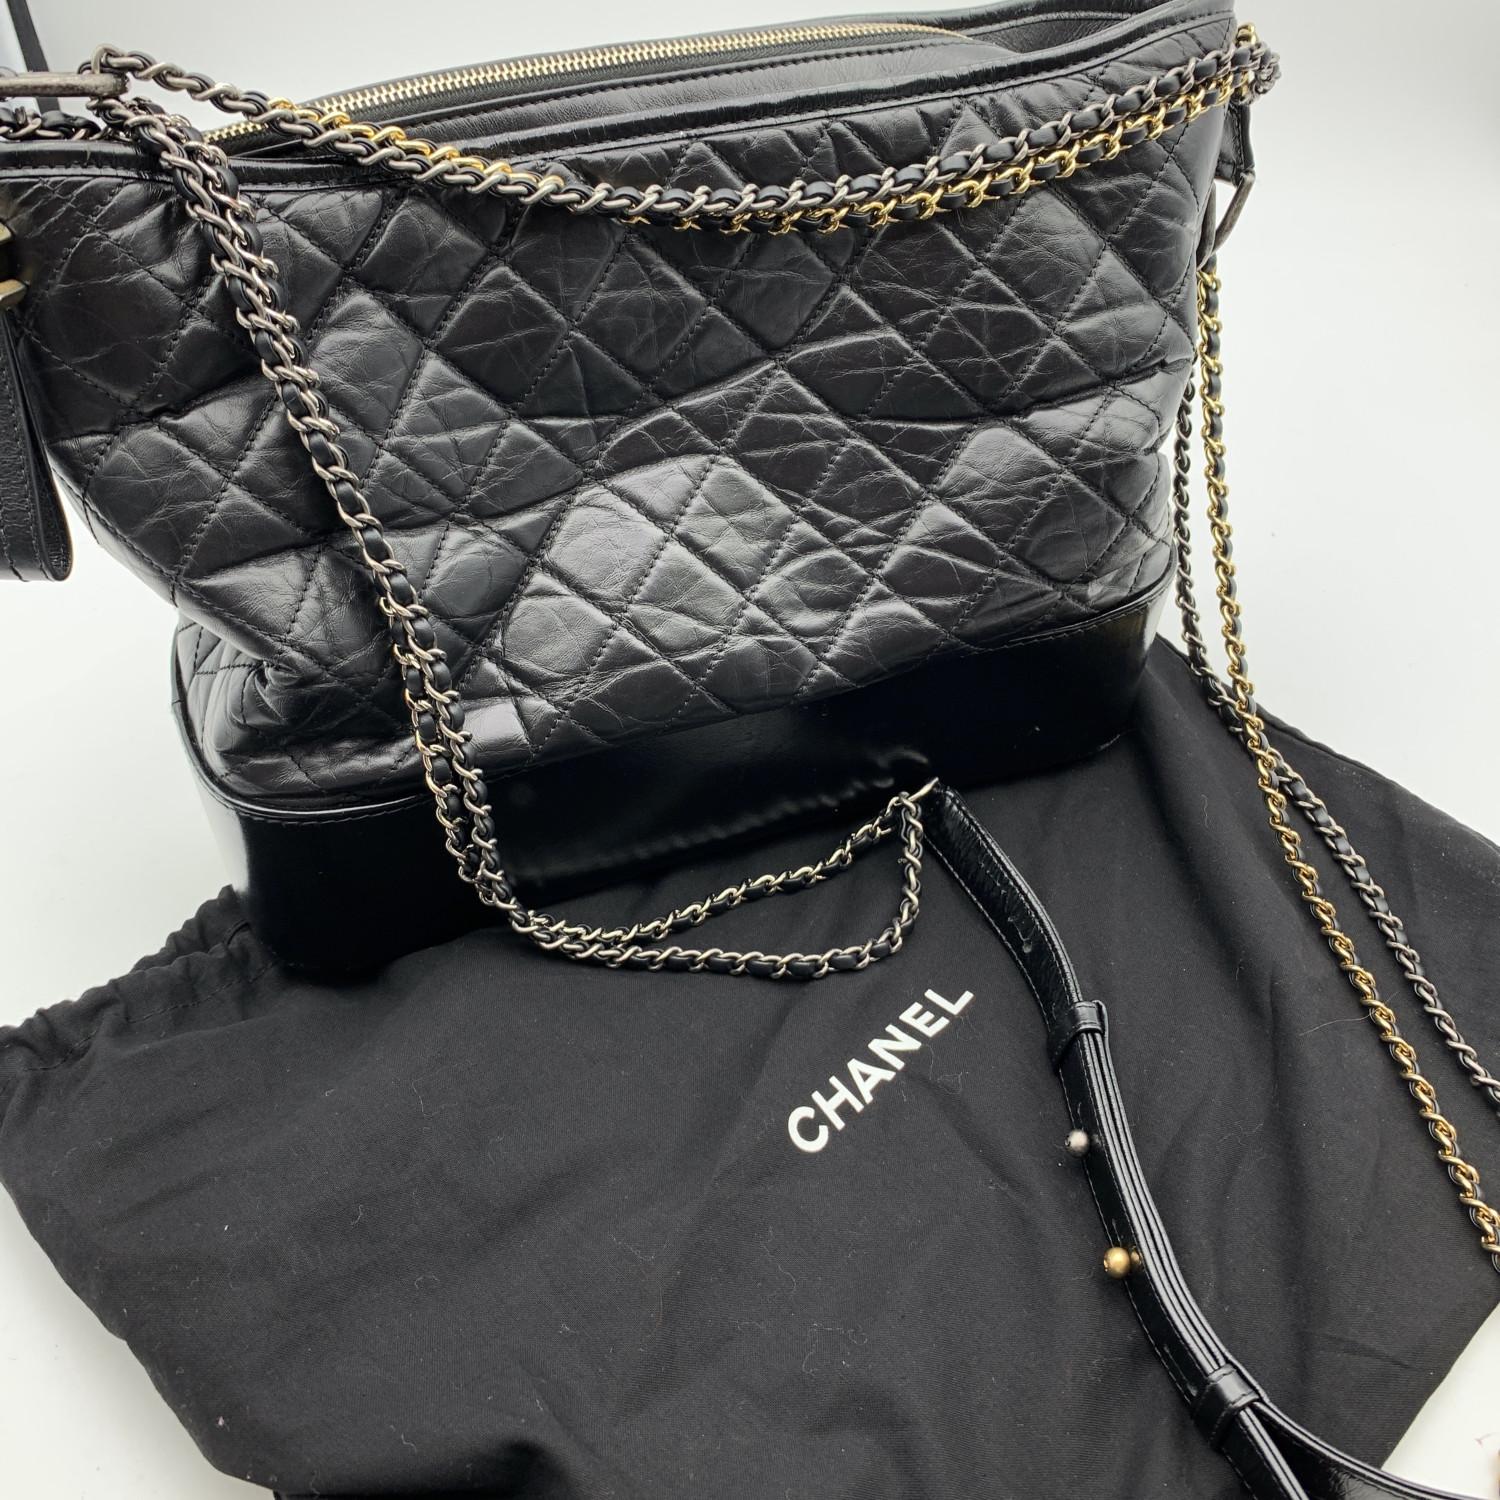 Chanel Black Quilted Leather Gabrielle Large Hobo Shoulder Bag For Sale 3